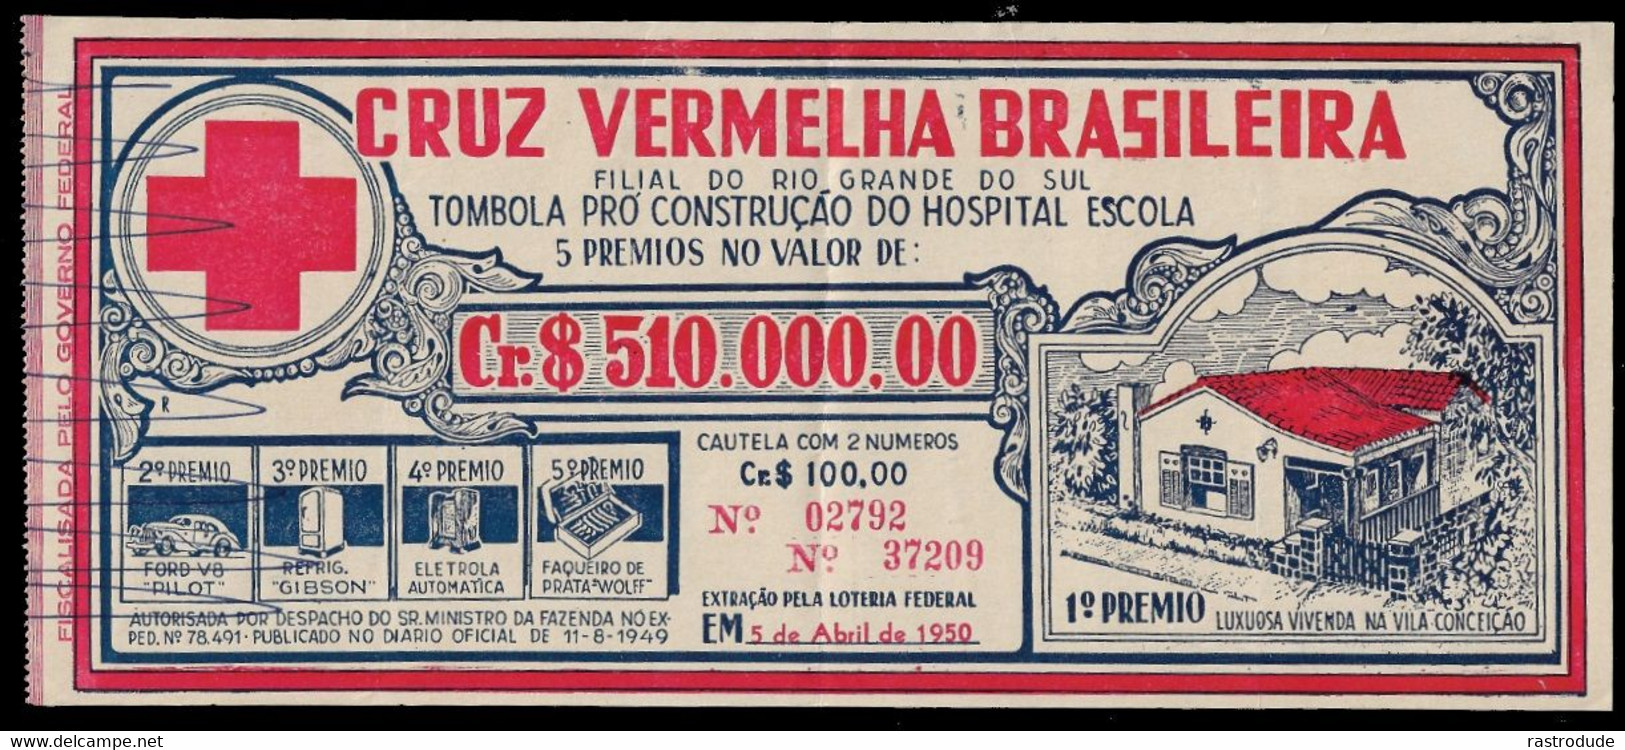 Lottery Tickets - 1950 BRASIL - LOTTERY TICKET LOTERIA CRUZ